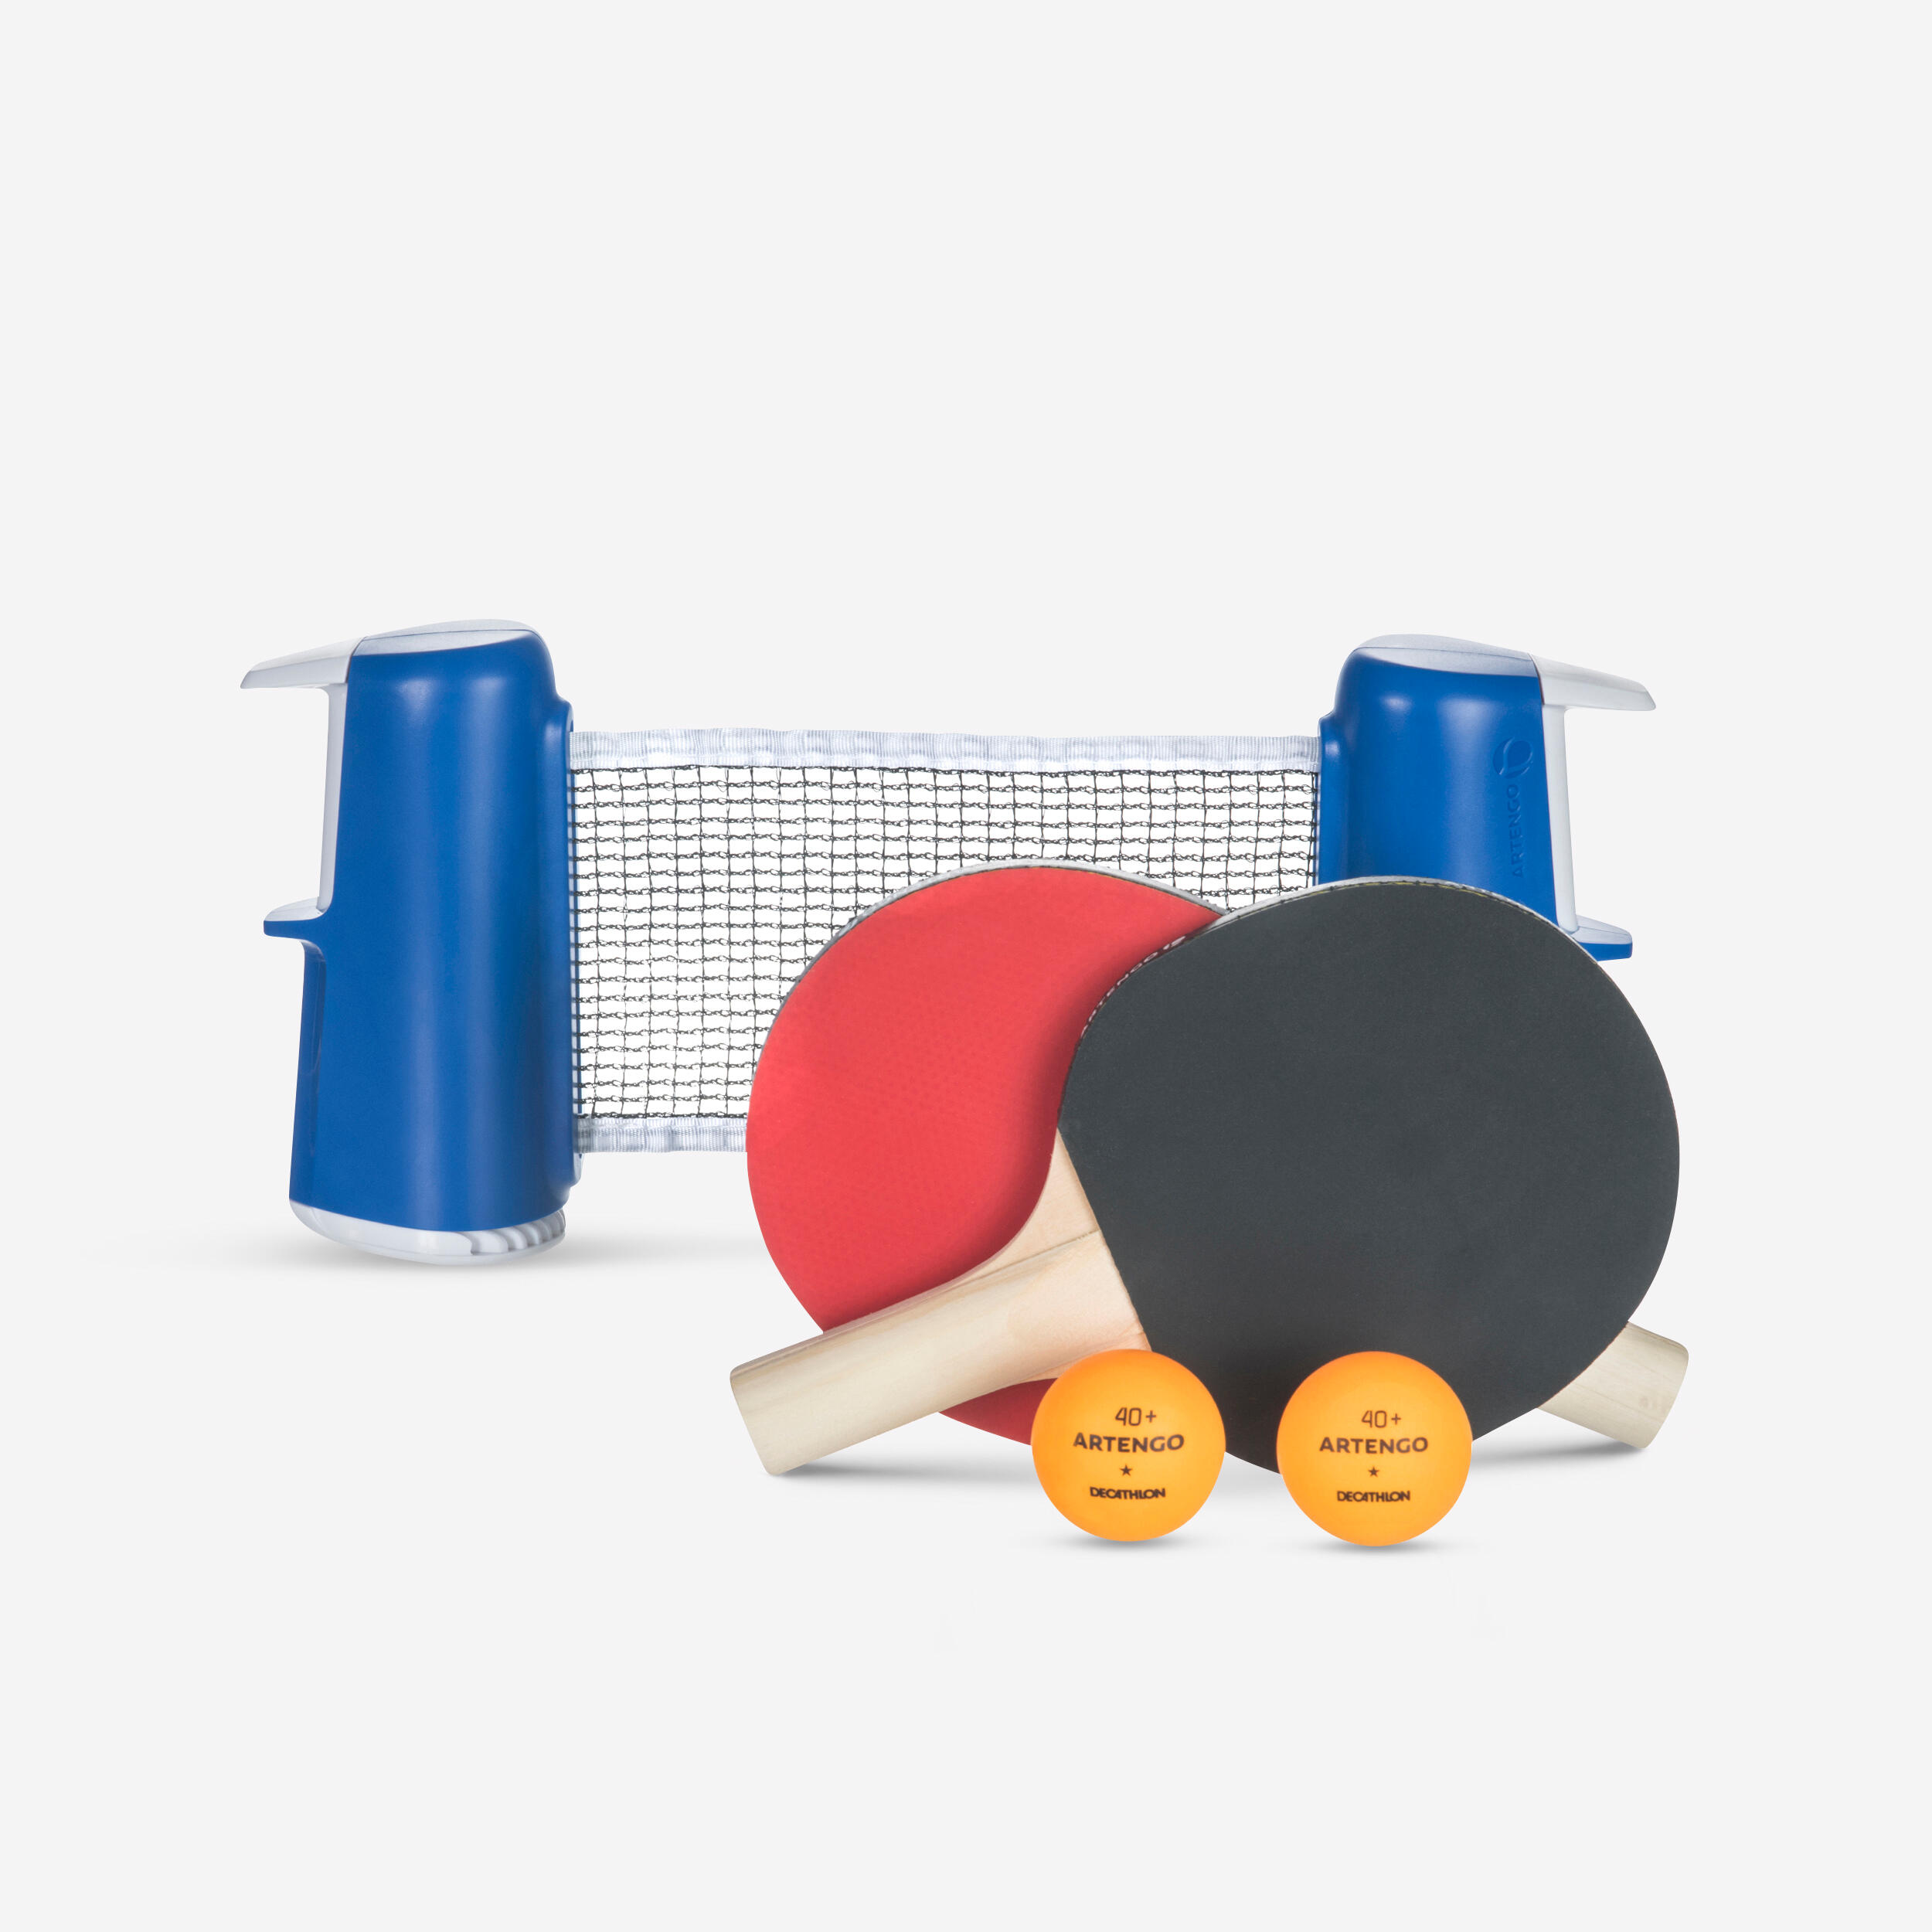 artengo mini table tennis